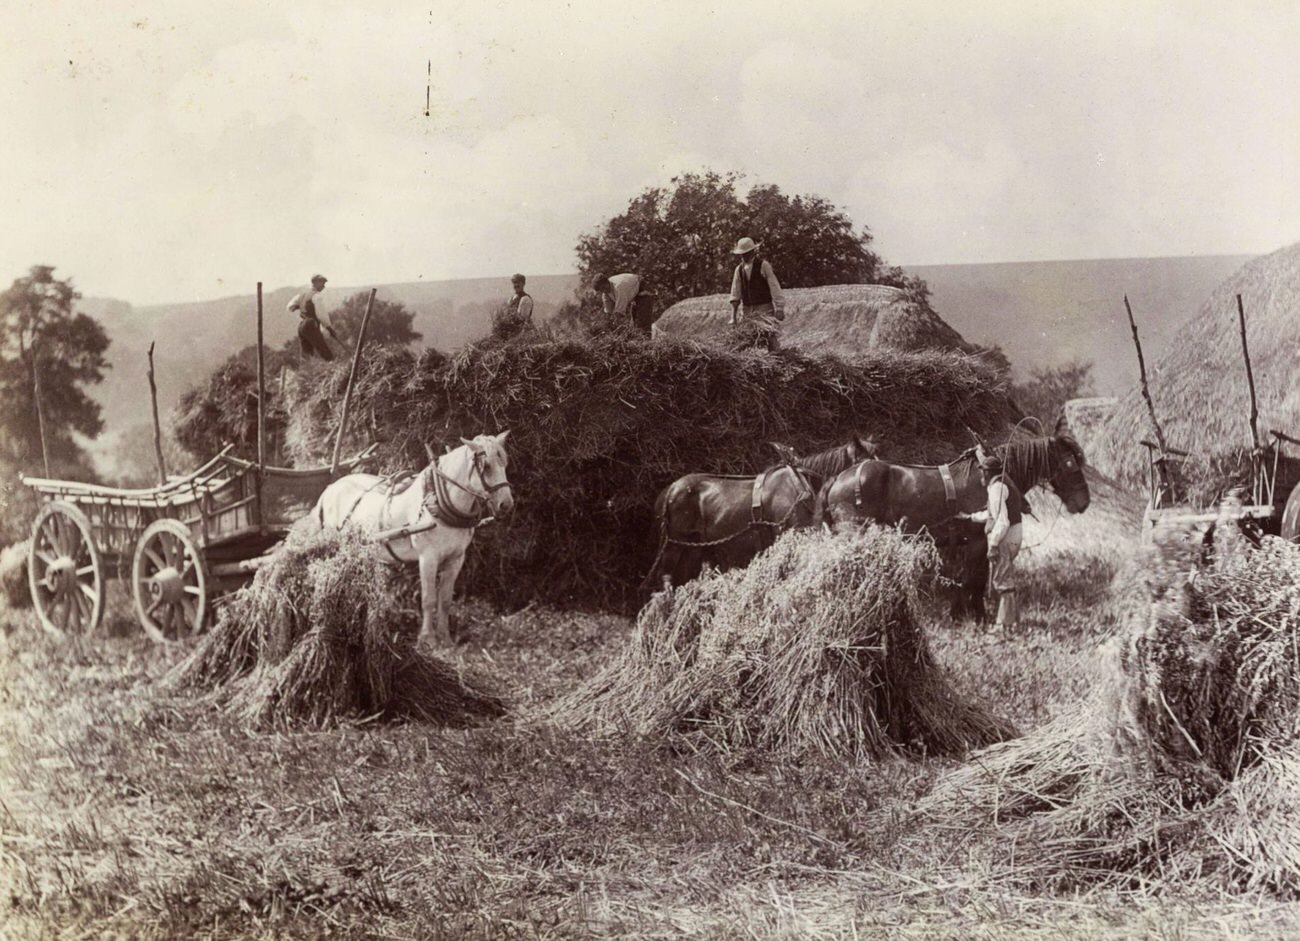 Farm laborers harvesting wheat in England, circa 1890.